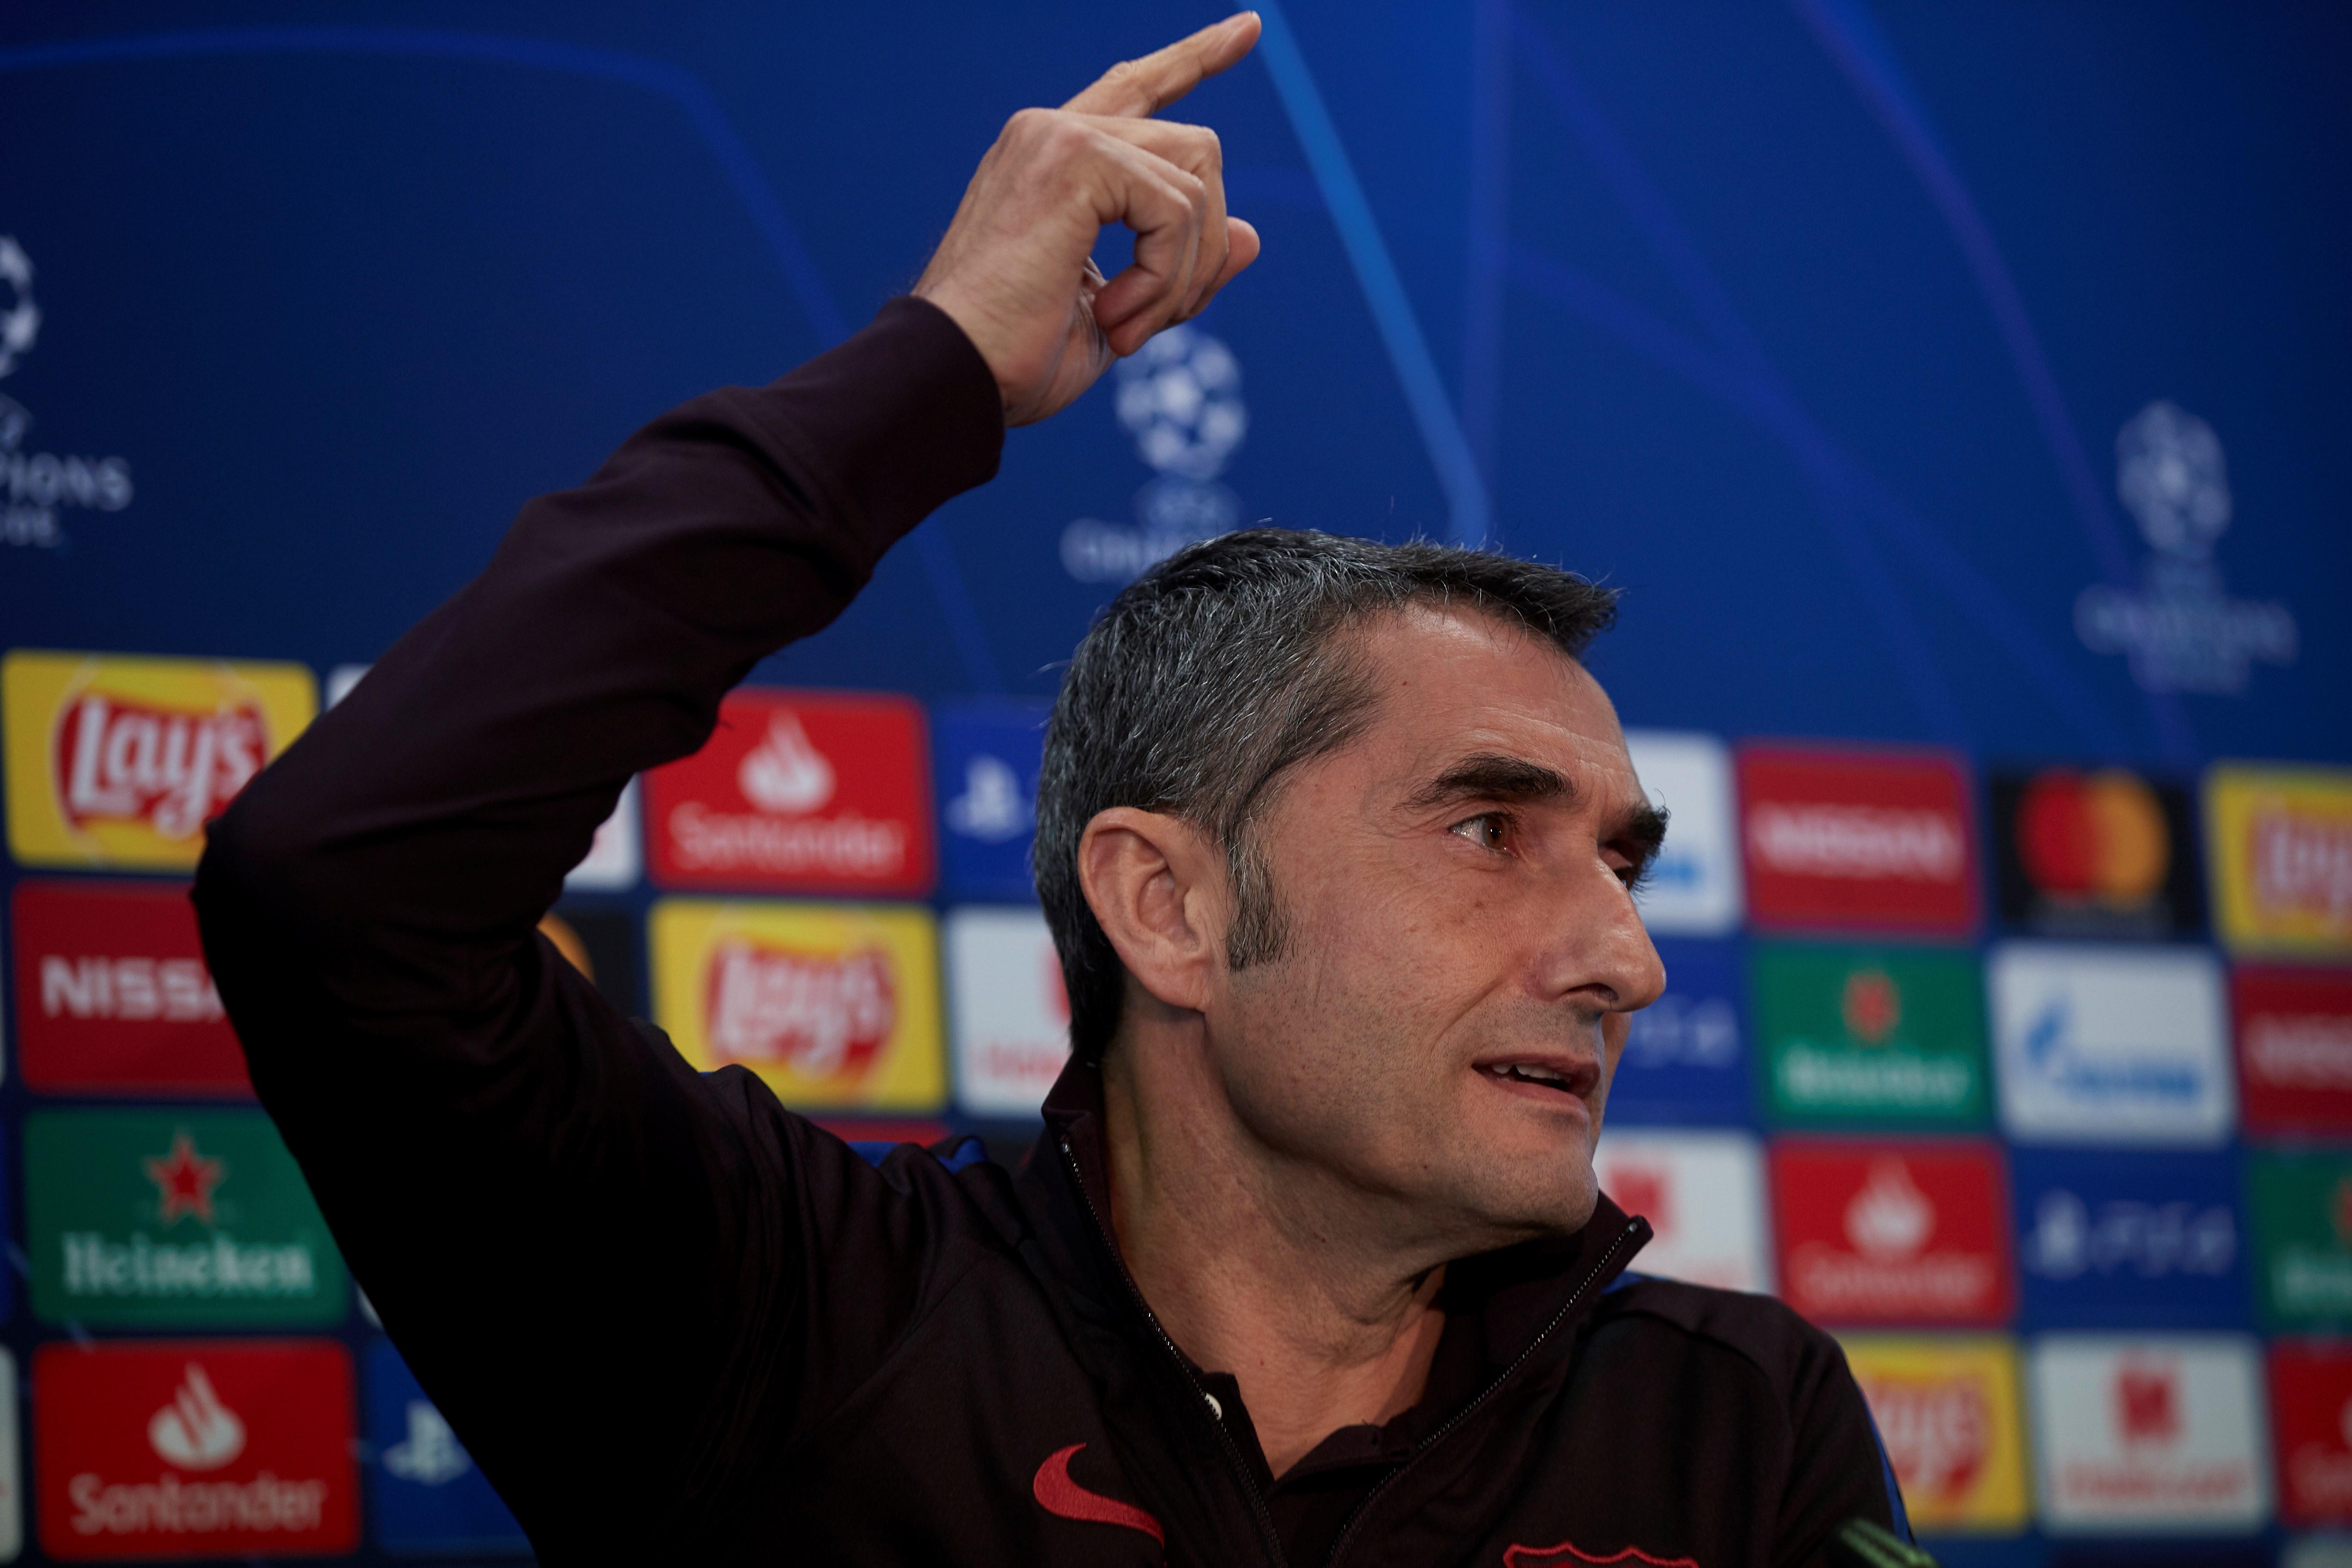 Valverde reconeix problemes: "Hem de buscar solucions"